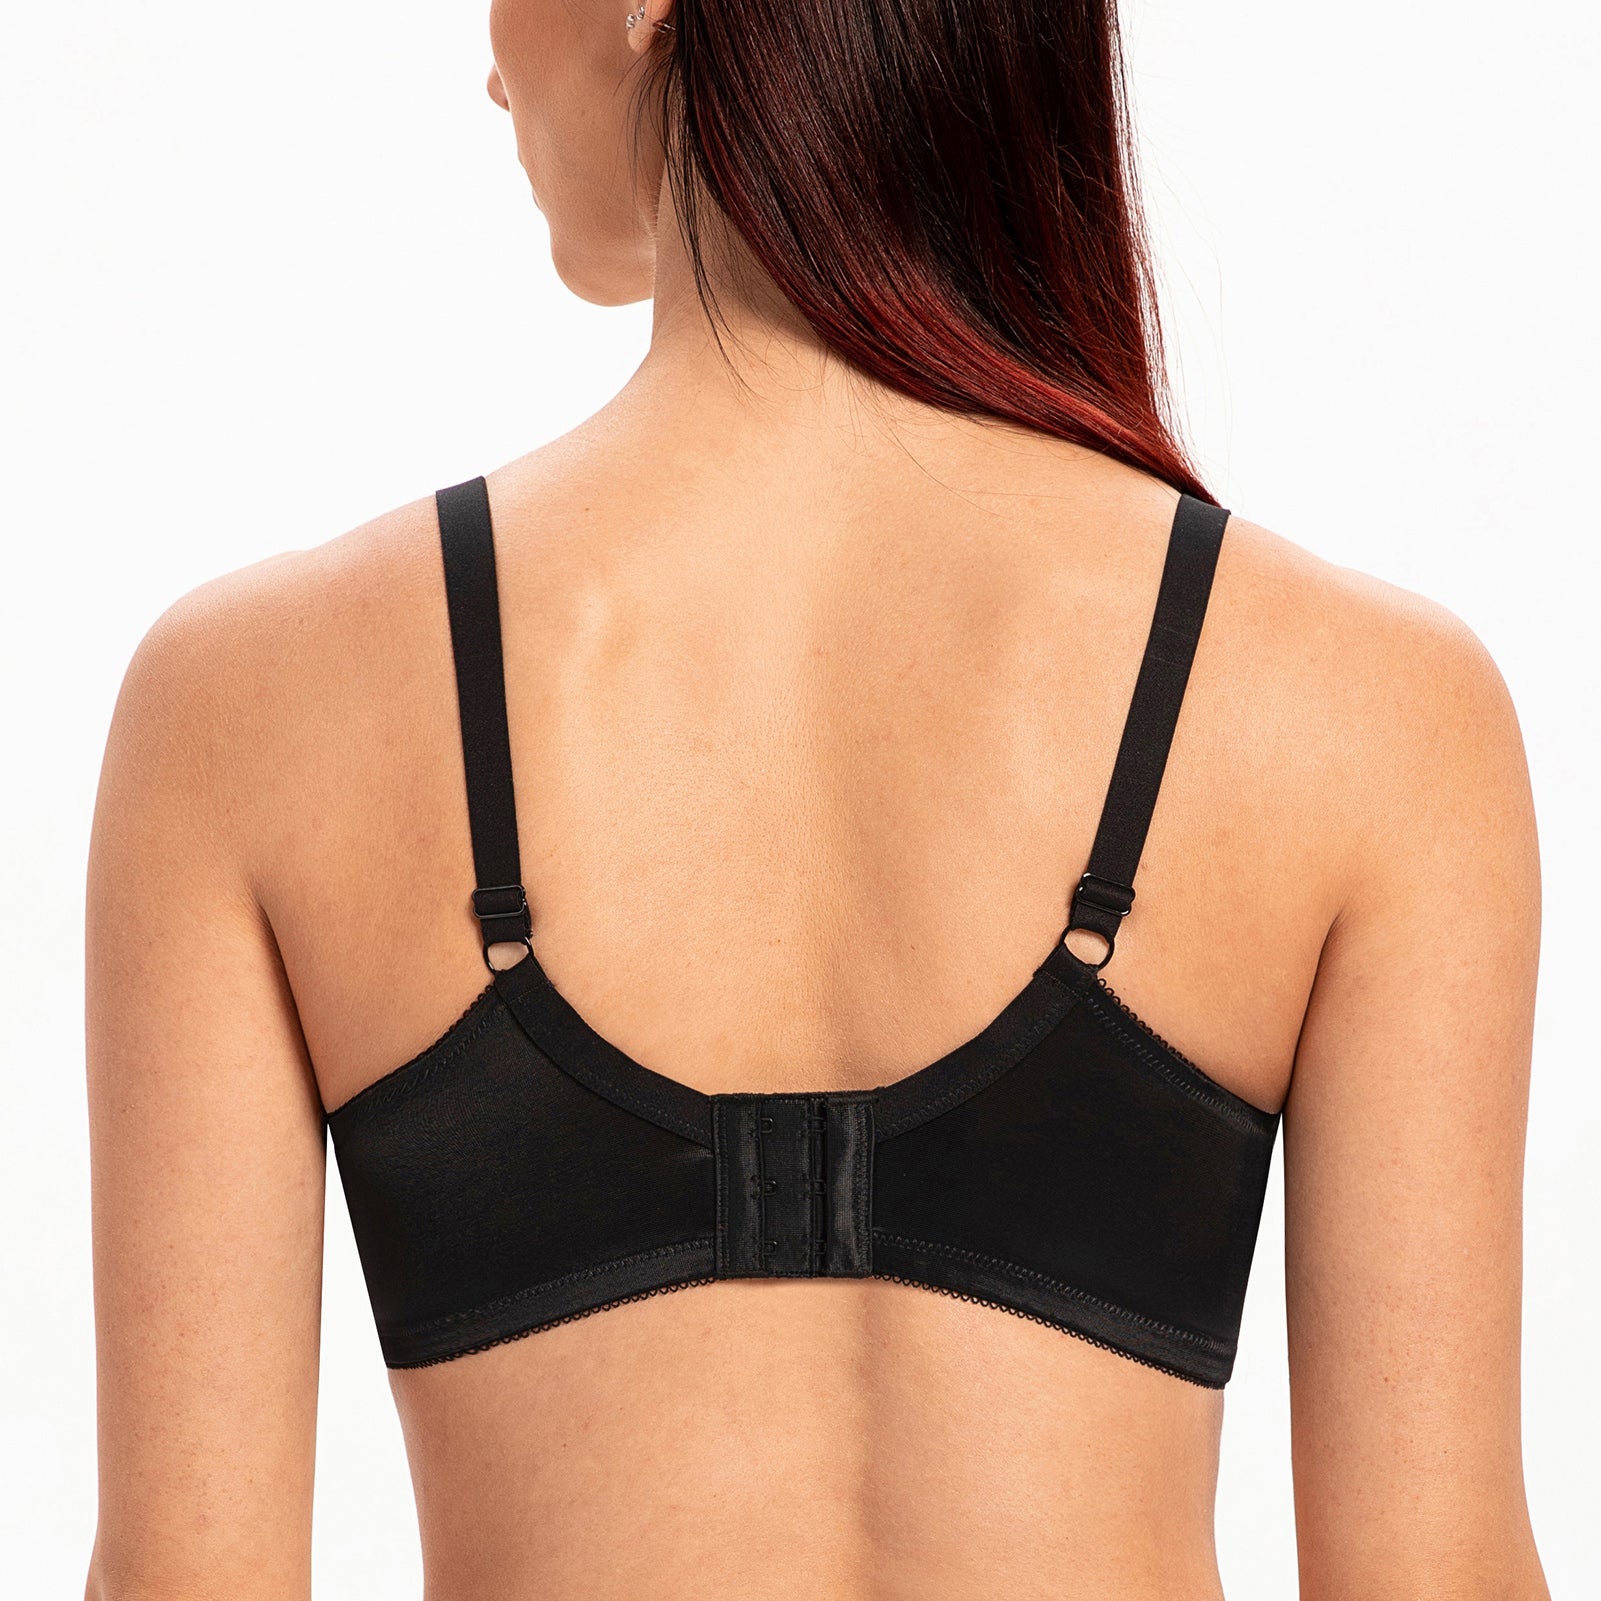 MELENECA Women's Minimizer Bra Full Coverage Plus Size Underwire Lace  Comfort Cushion Strap